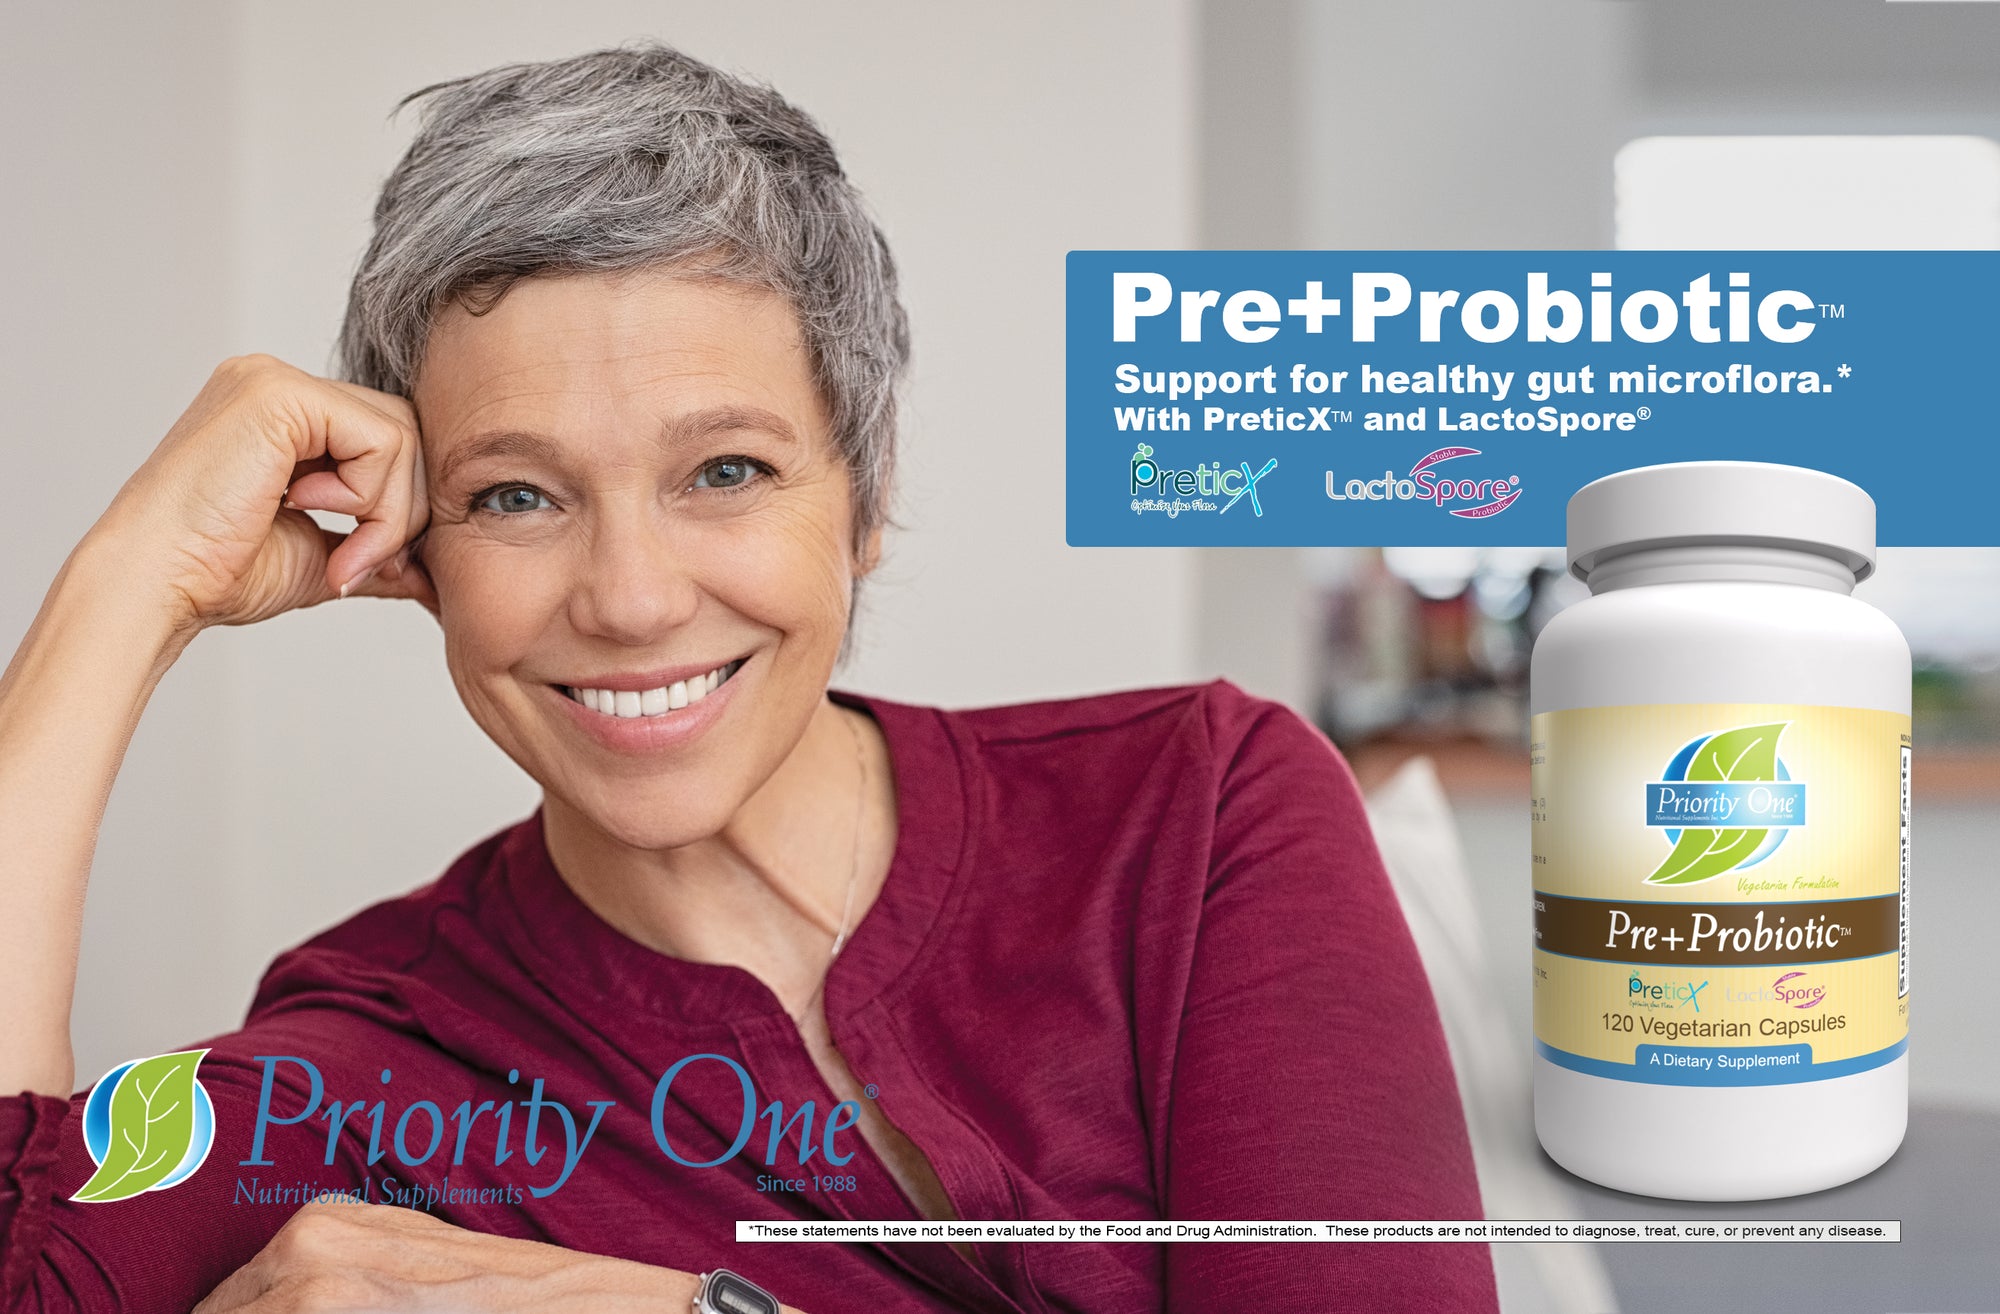 Pre+Probiotic (120 Vegetarian Capsules) Pre+Probiotic capsules support healthy gut microflora.*